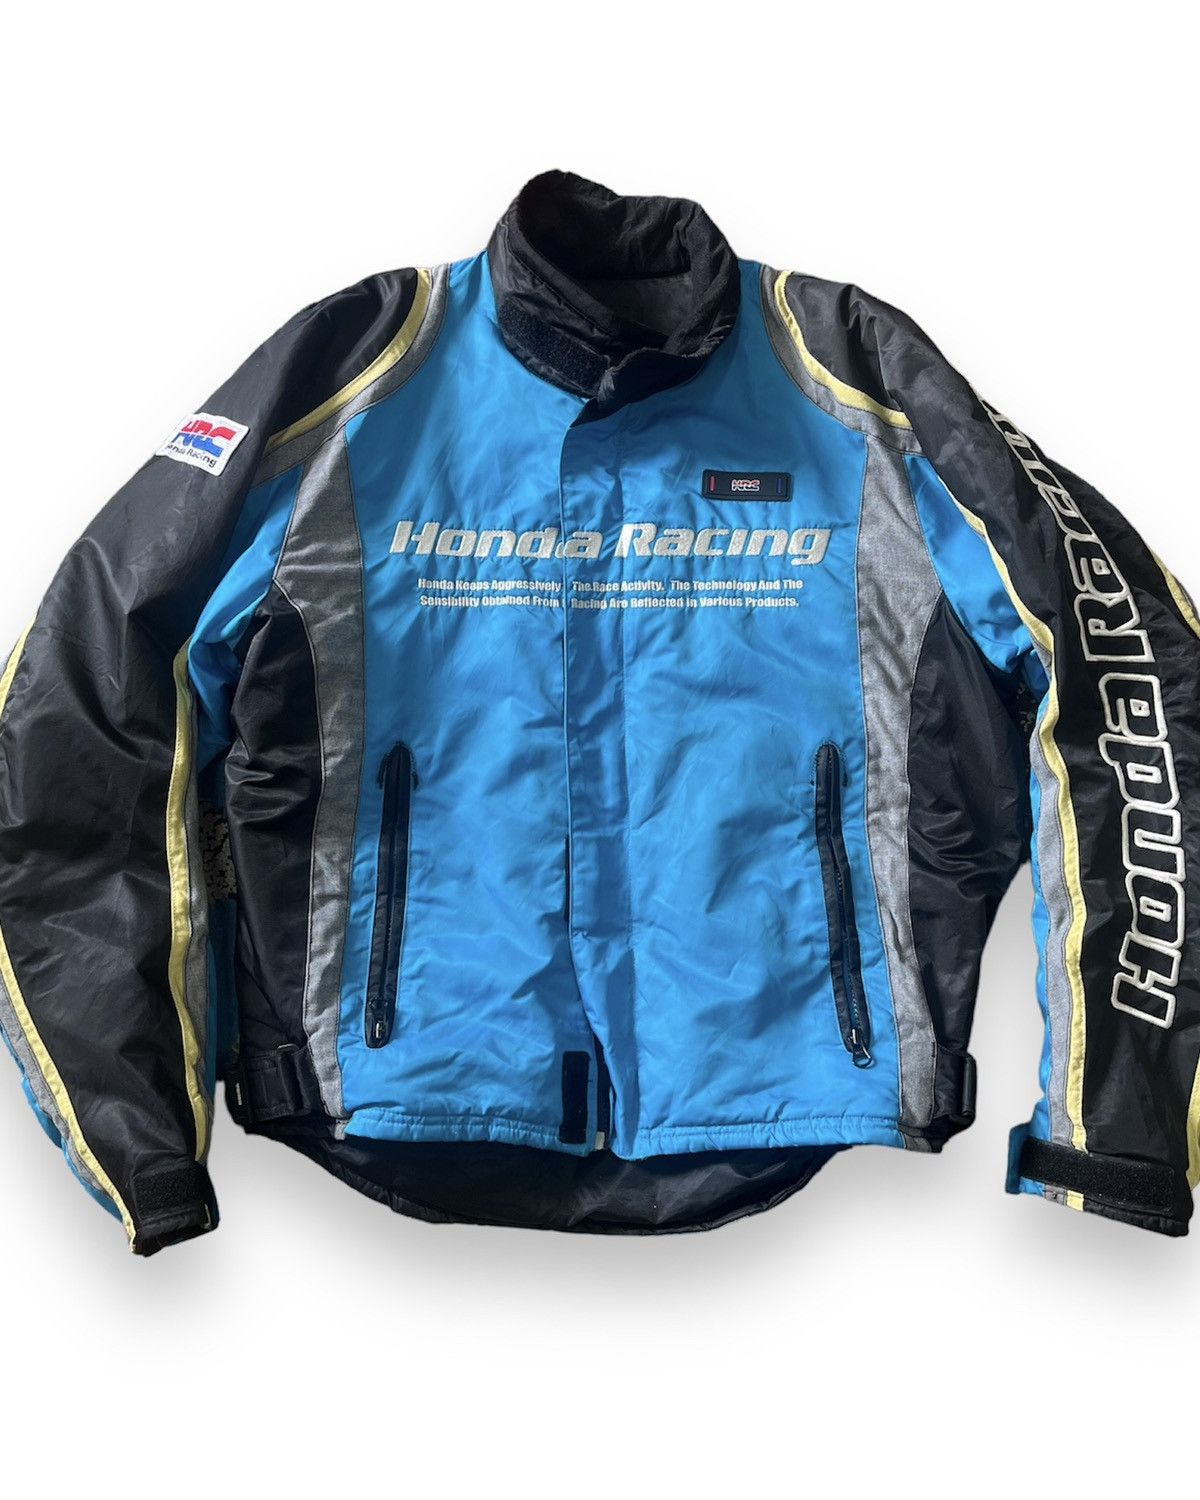 Sports Specialties - Honda Racing Jacket HRC Japan - 1